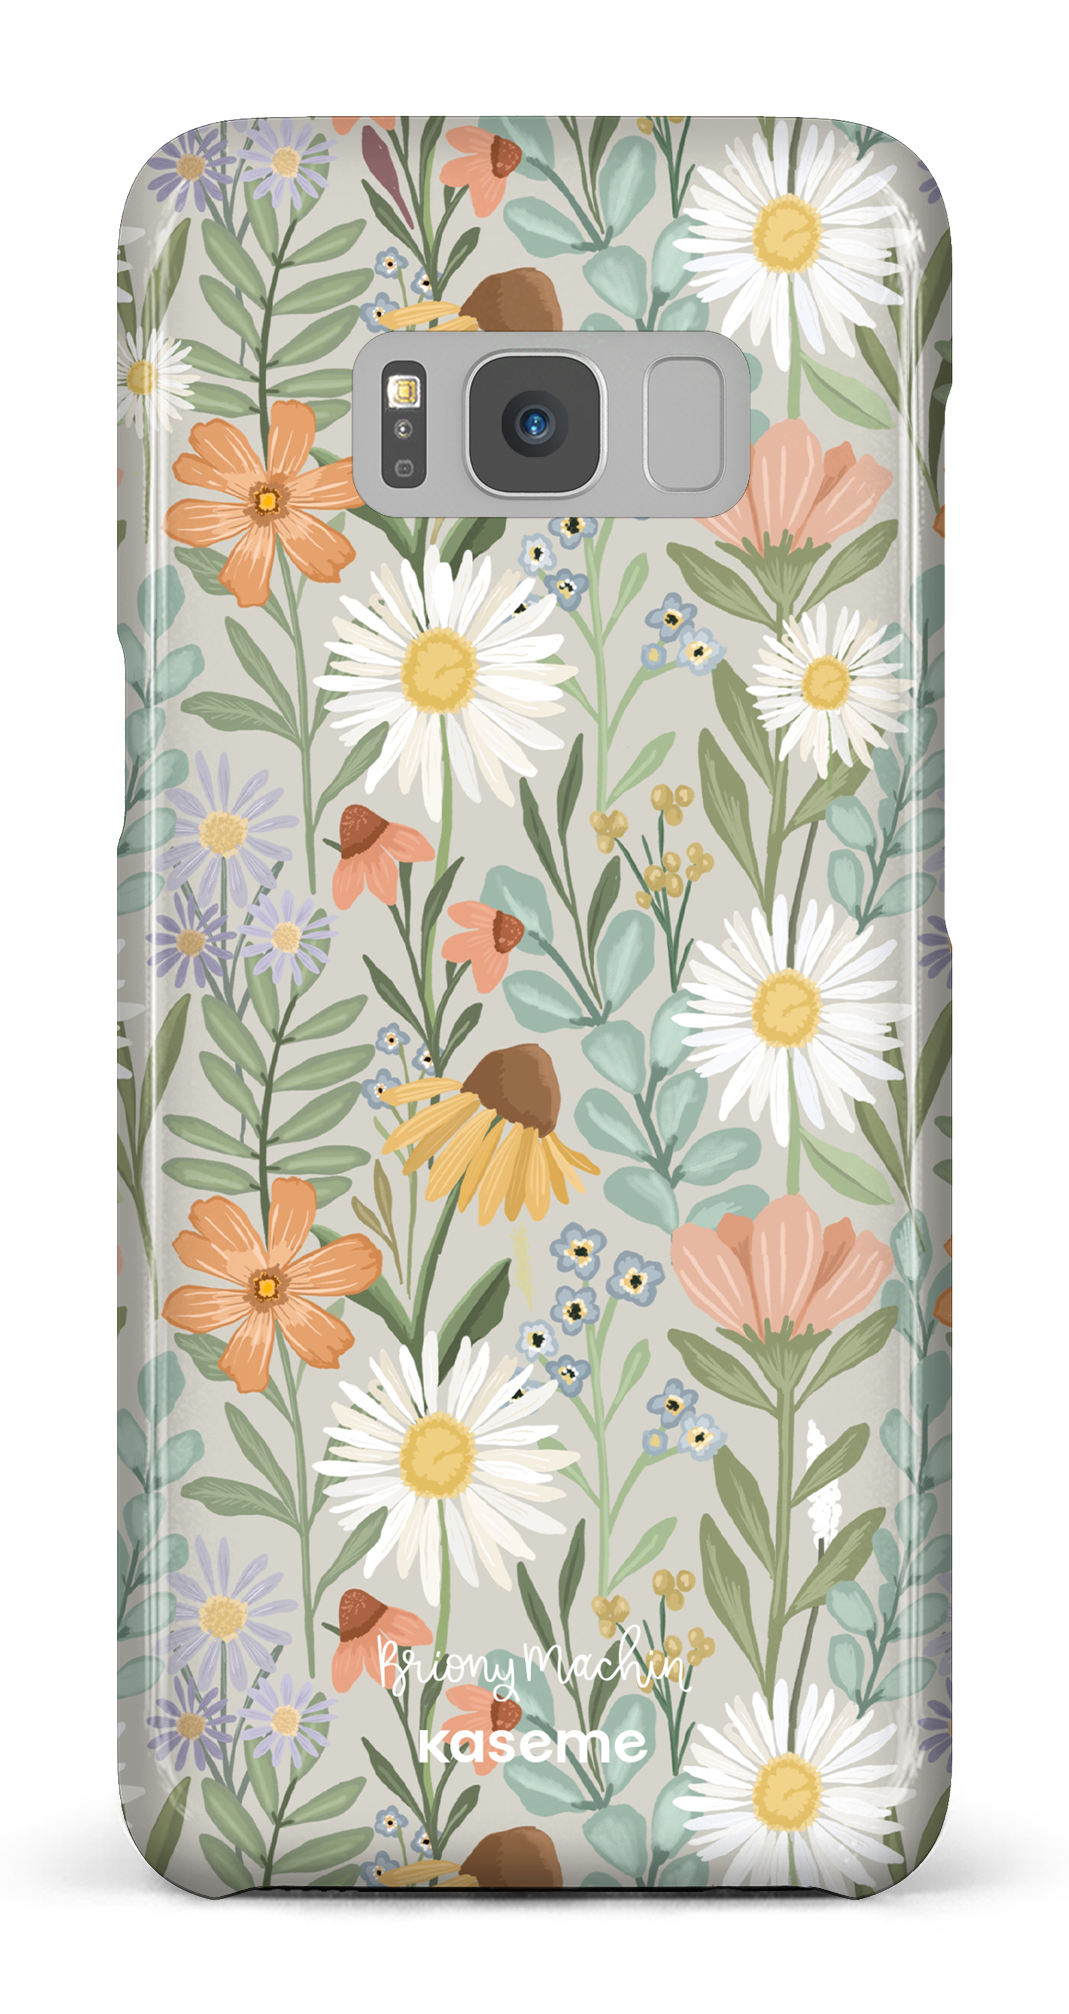 Sending Flowers by Briony Machin - Galaxy S8